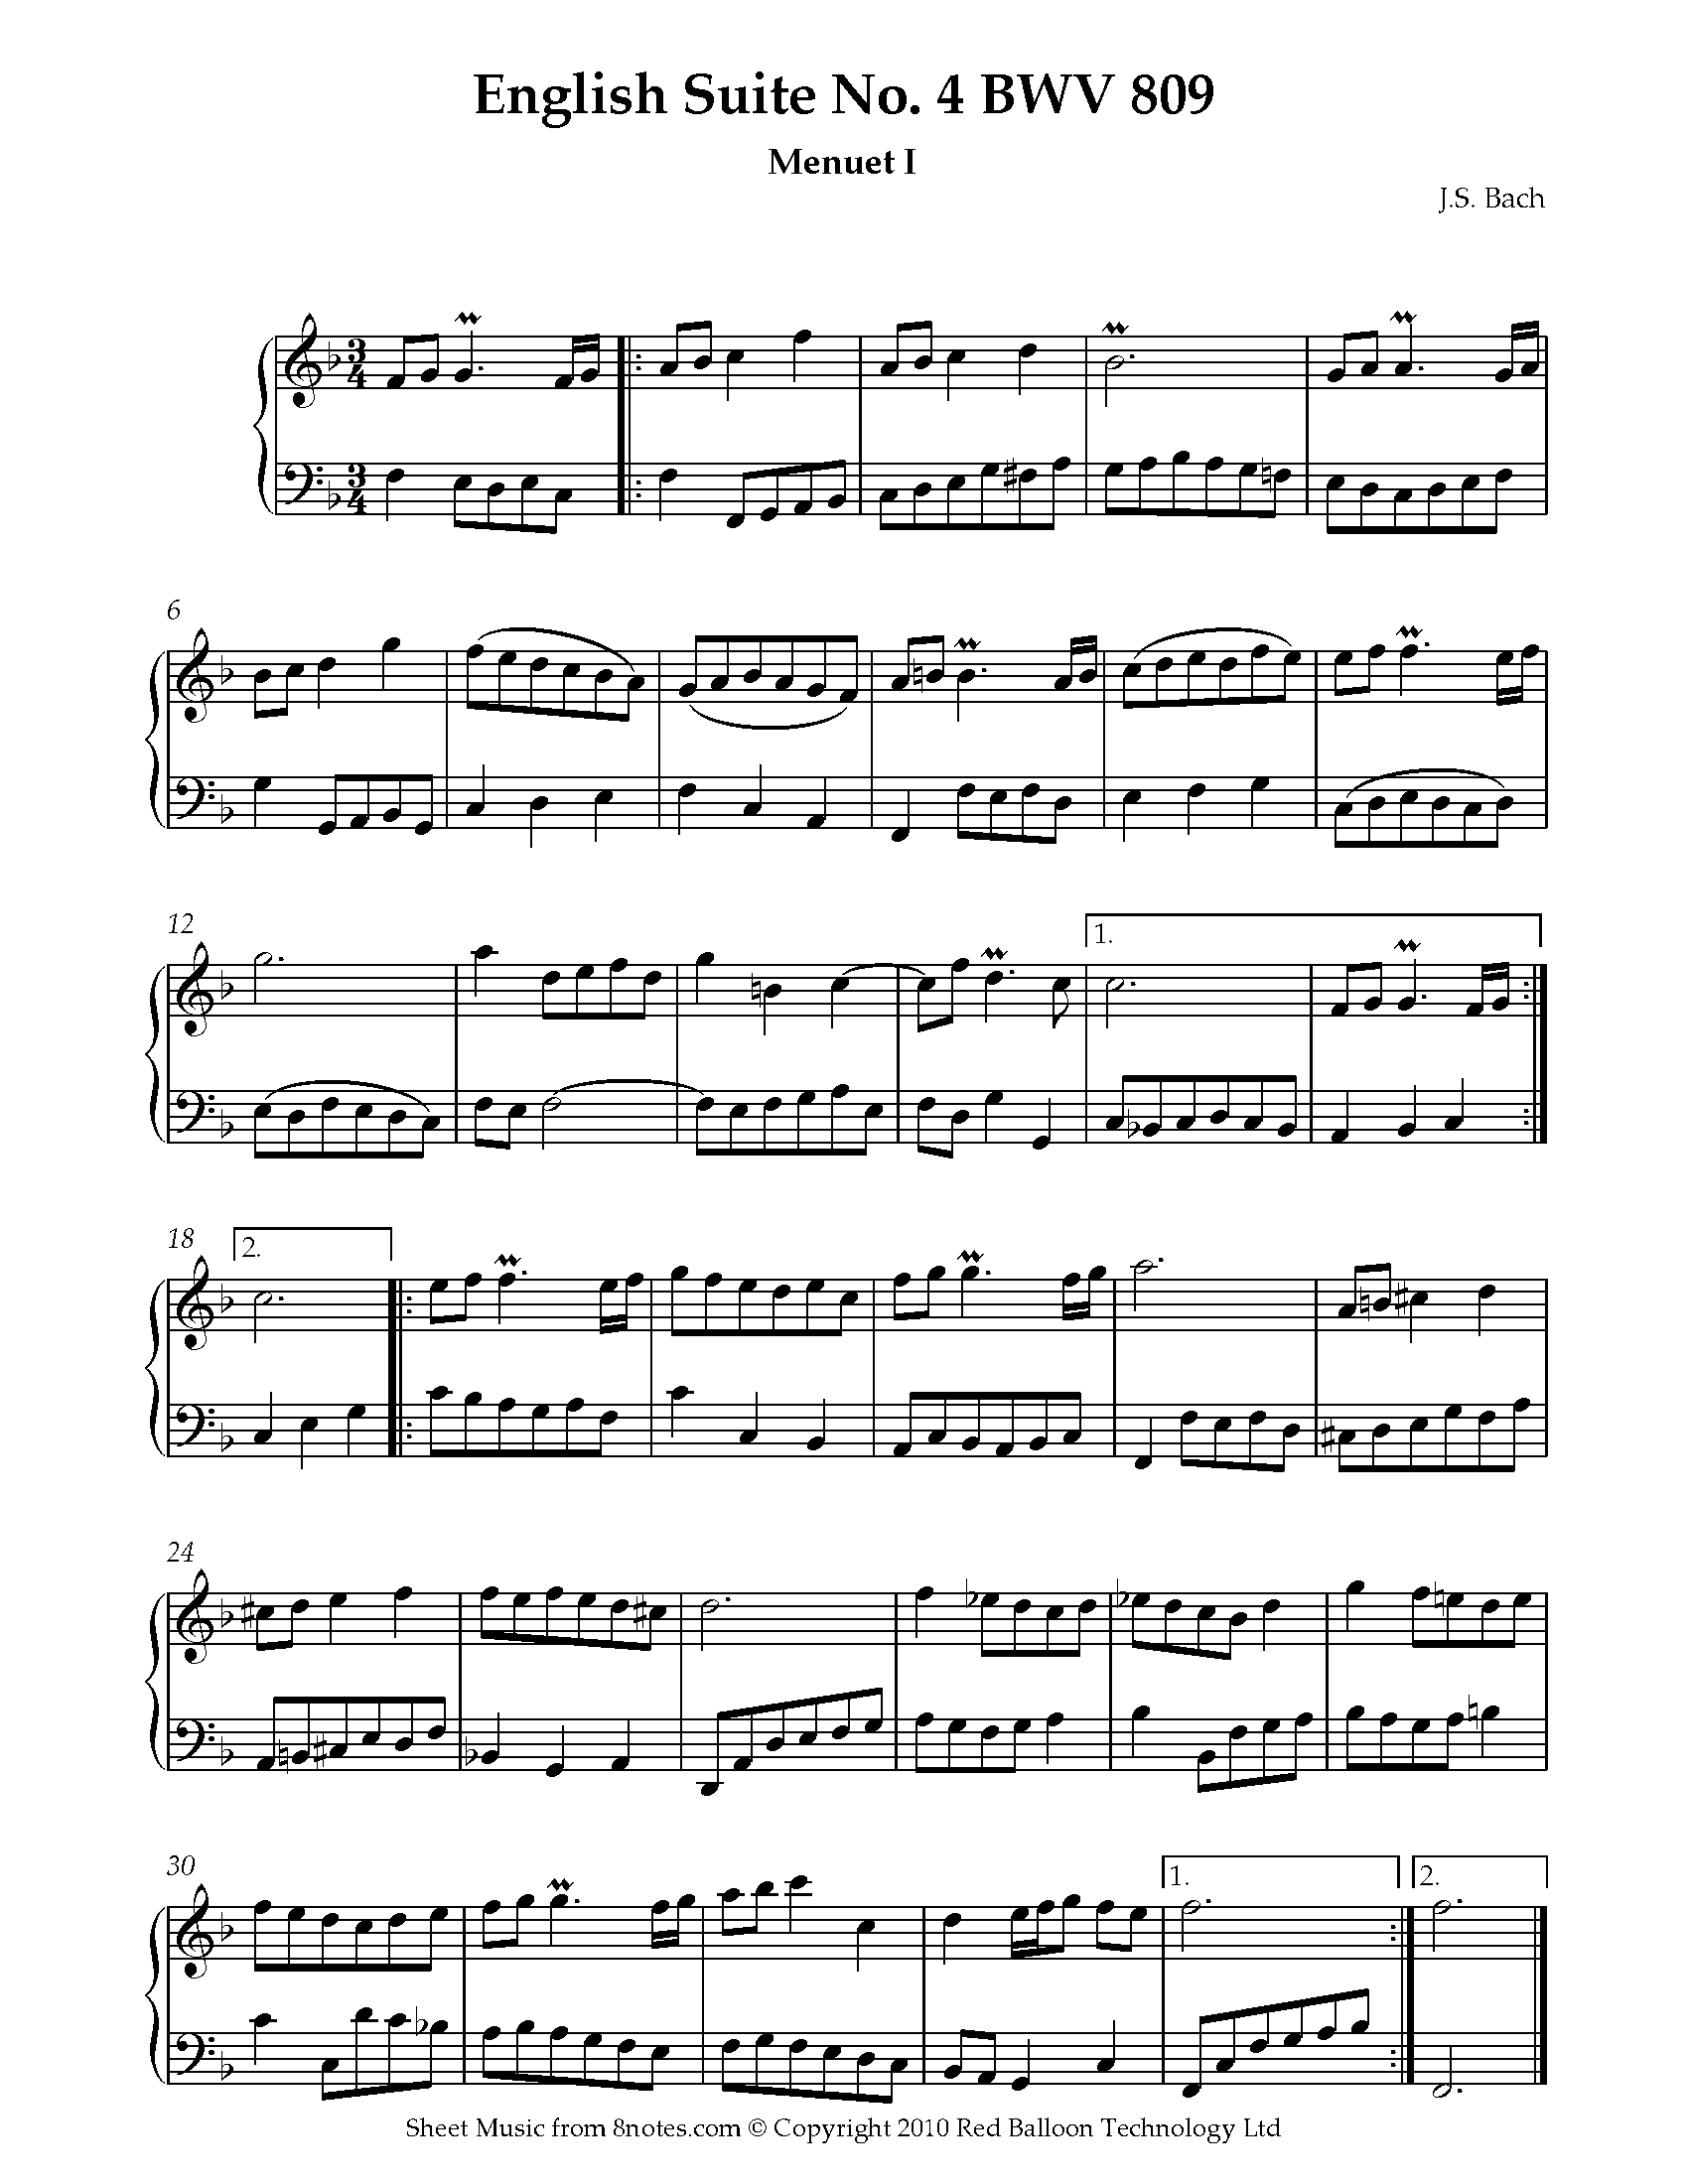 Bach - English Suite No. 4 BWV 809 Menuet I Sheet music for Piano ...